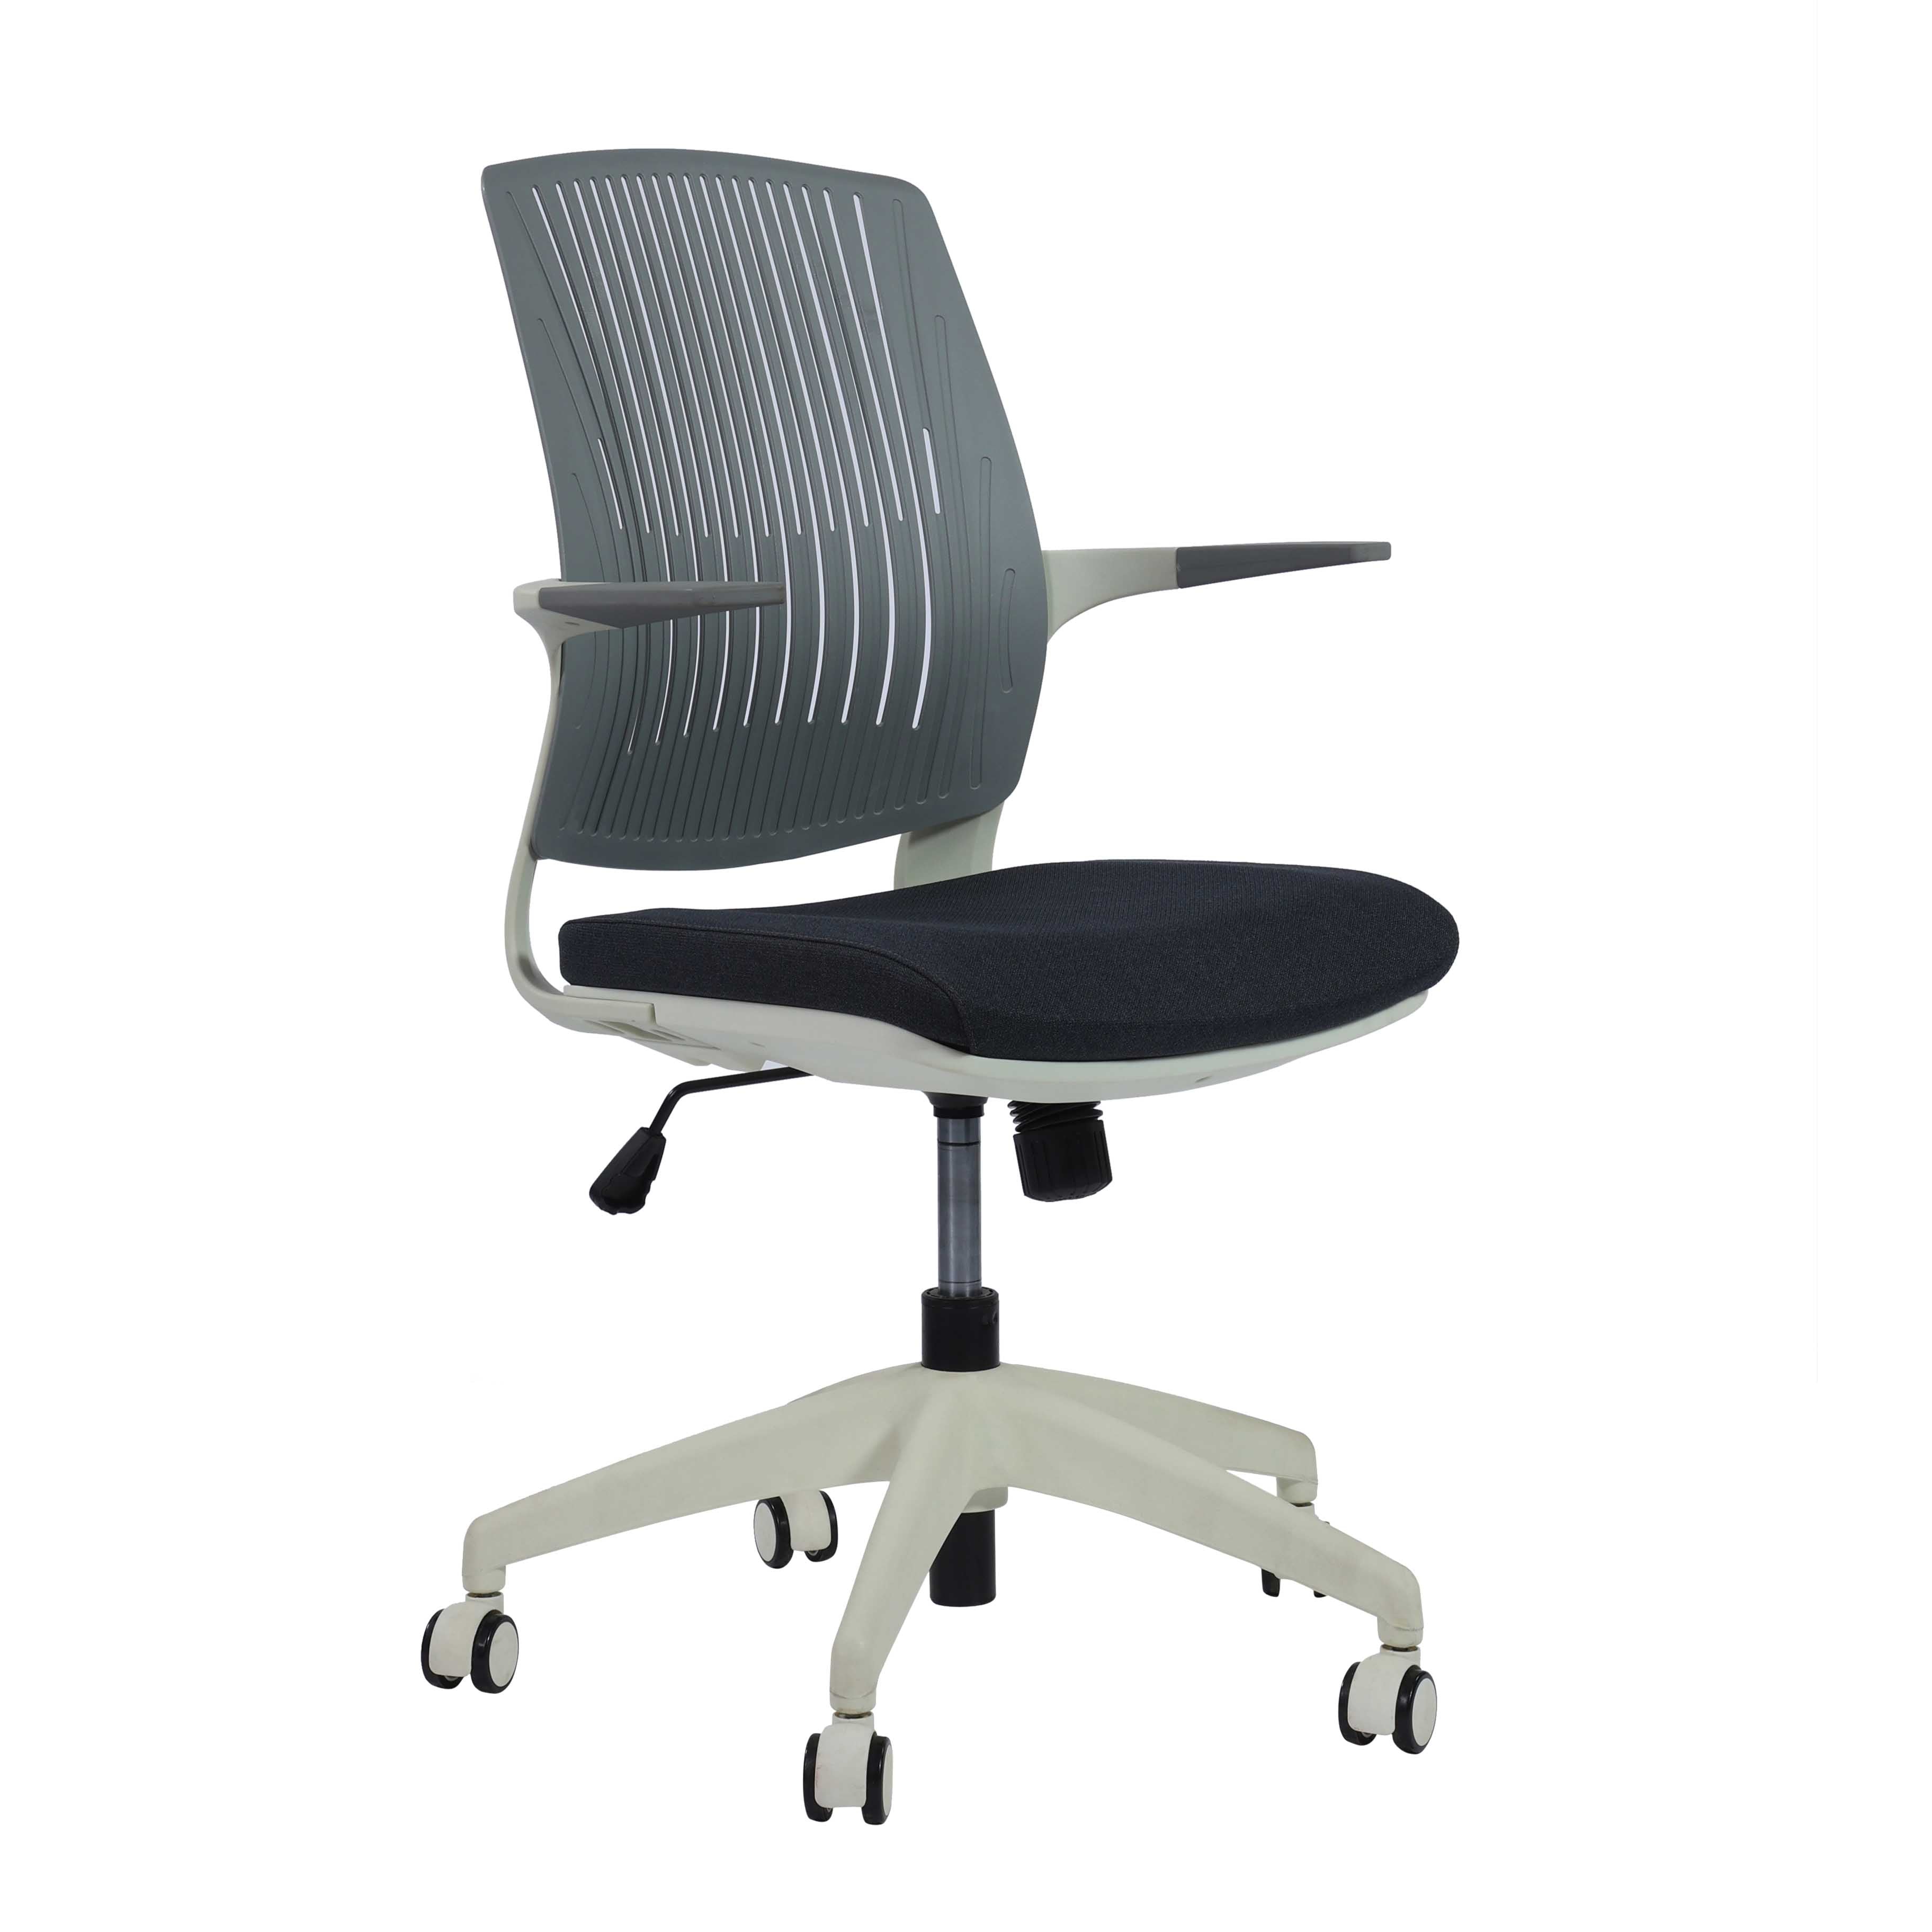 Viking Workstation Swivel Chair with Nylon Base - White Chair urbancart